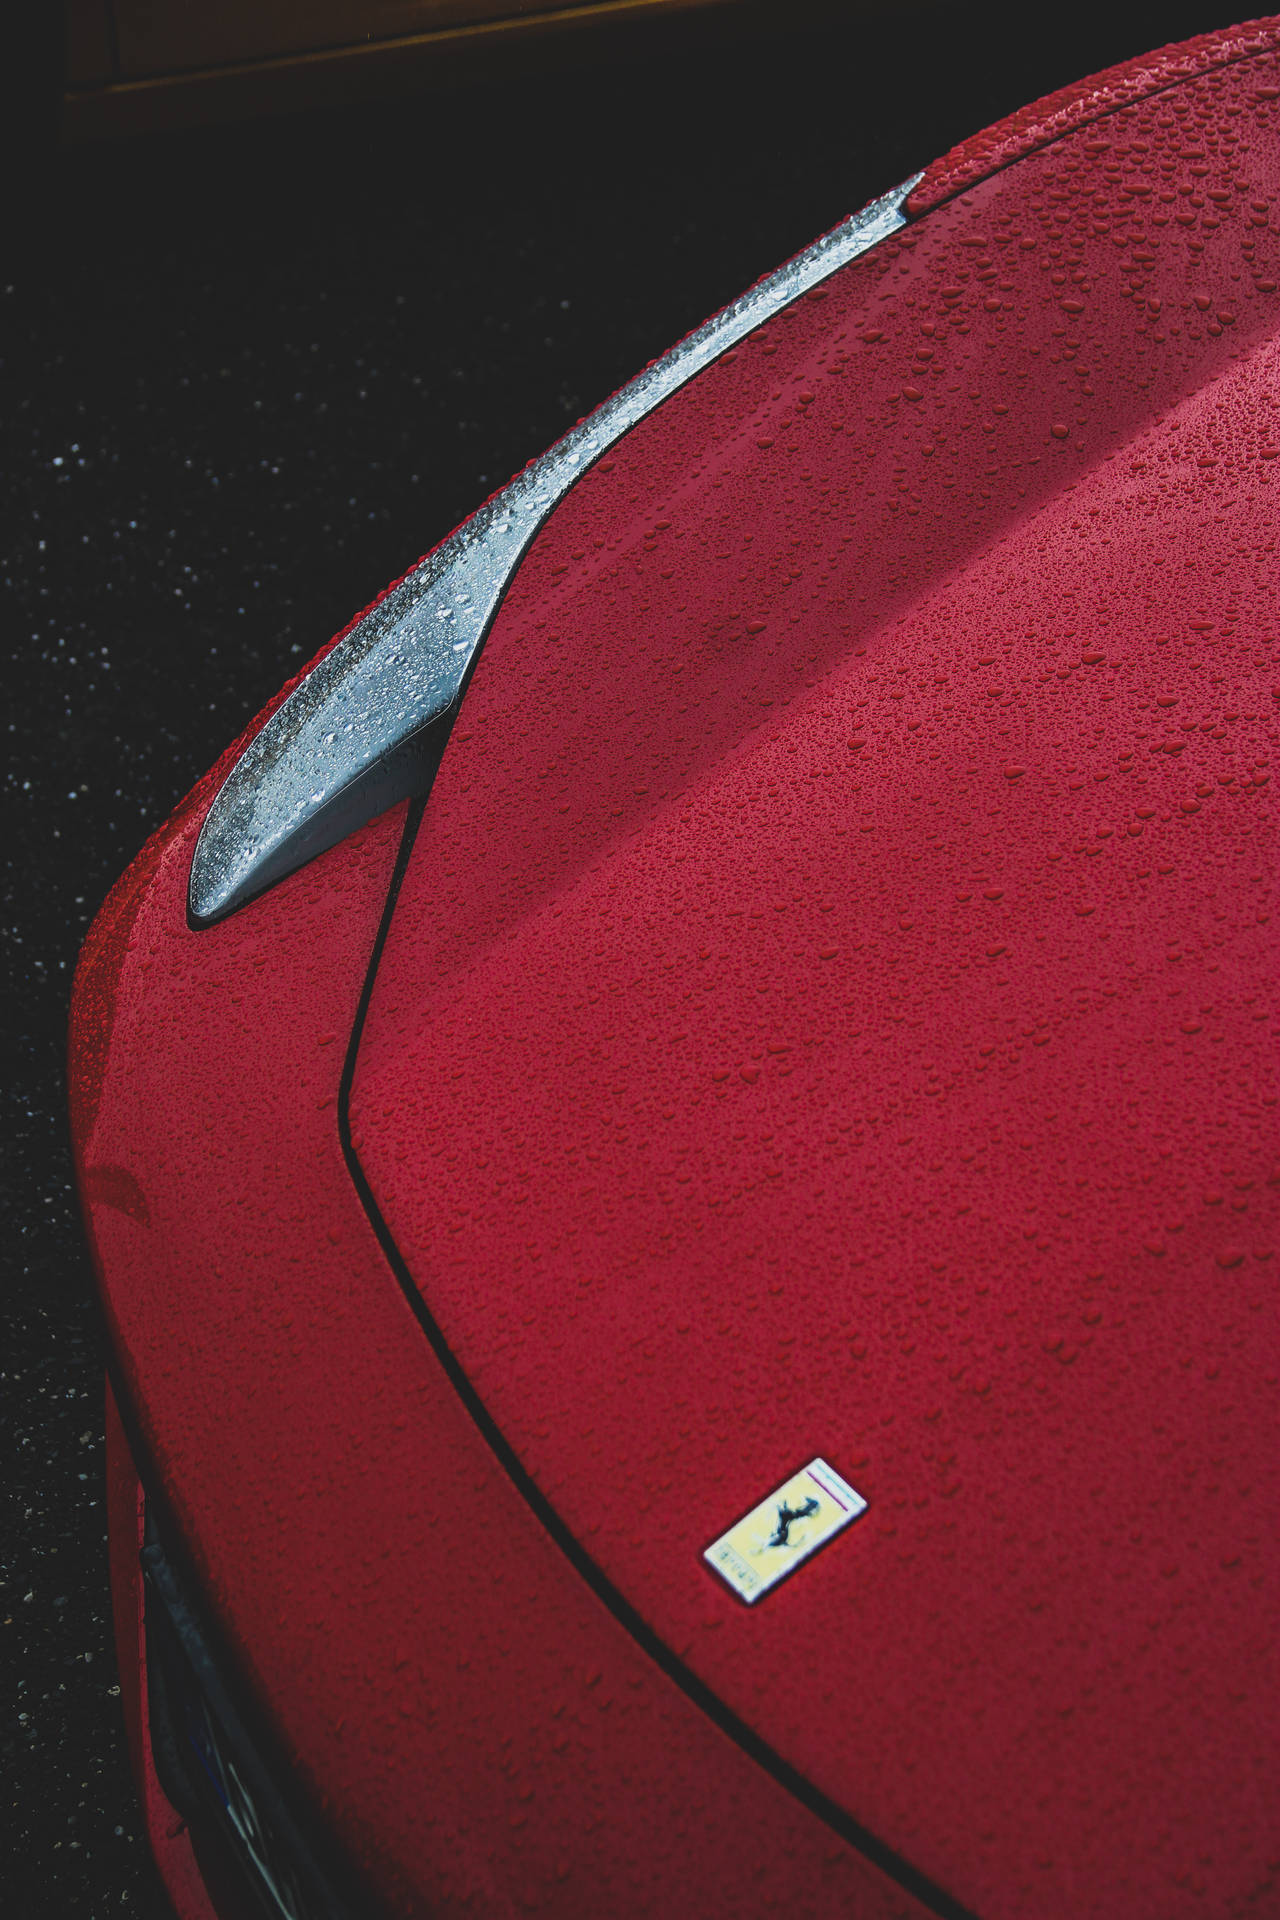 Exotic red Ferrari Wallpaper